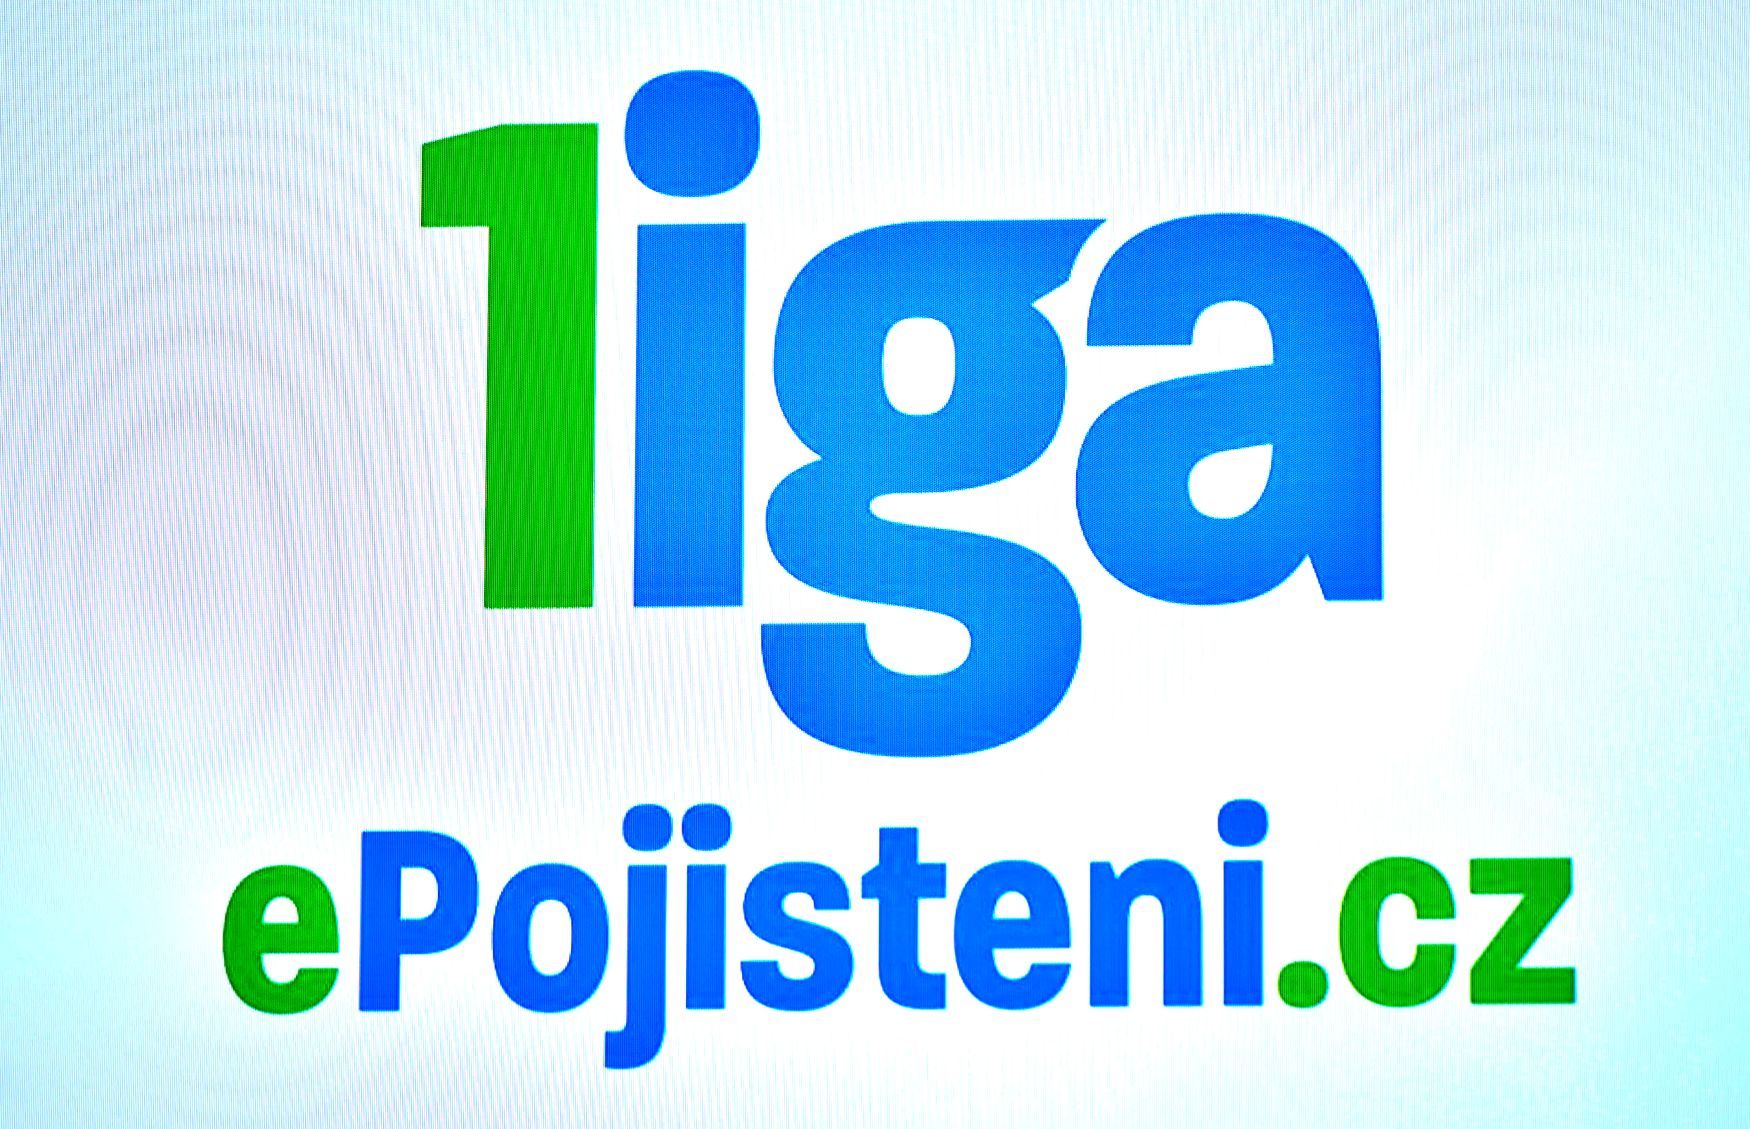 ePojisteni.cz liga (logo)